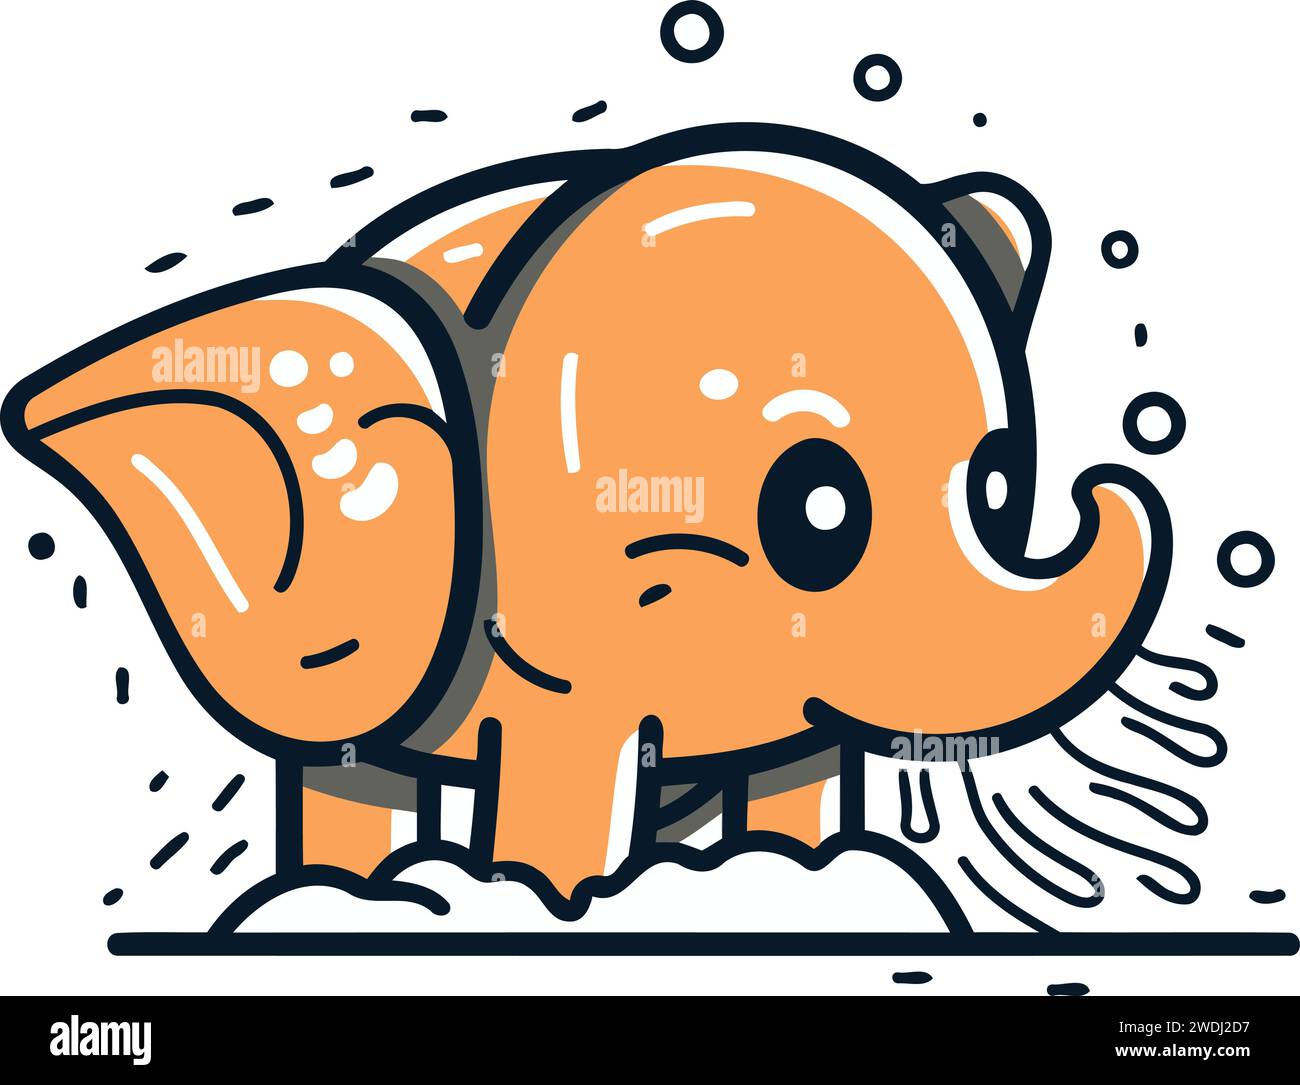 Cute cartoon elephant. Vector illustration in doodle style. Stock Vector